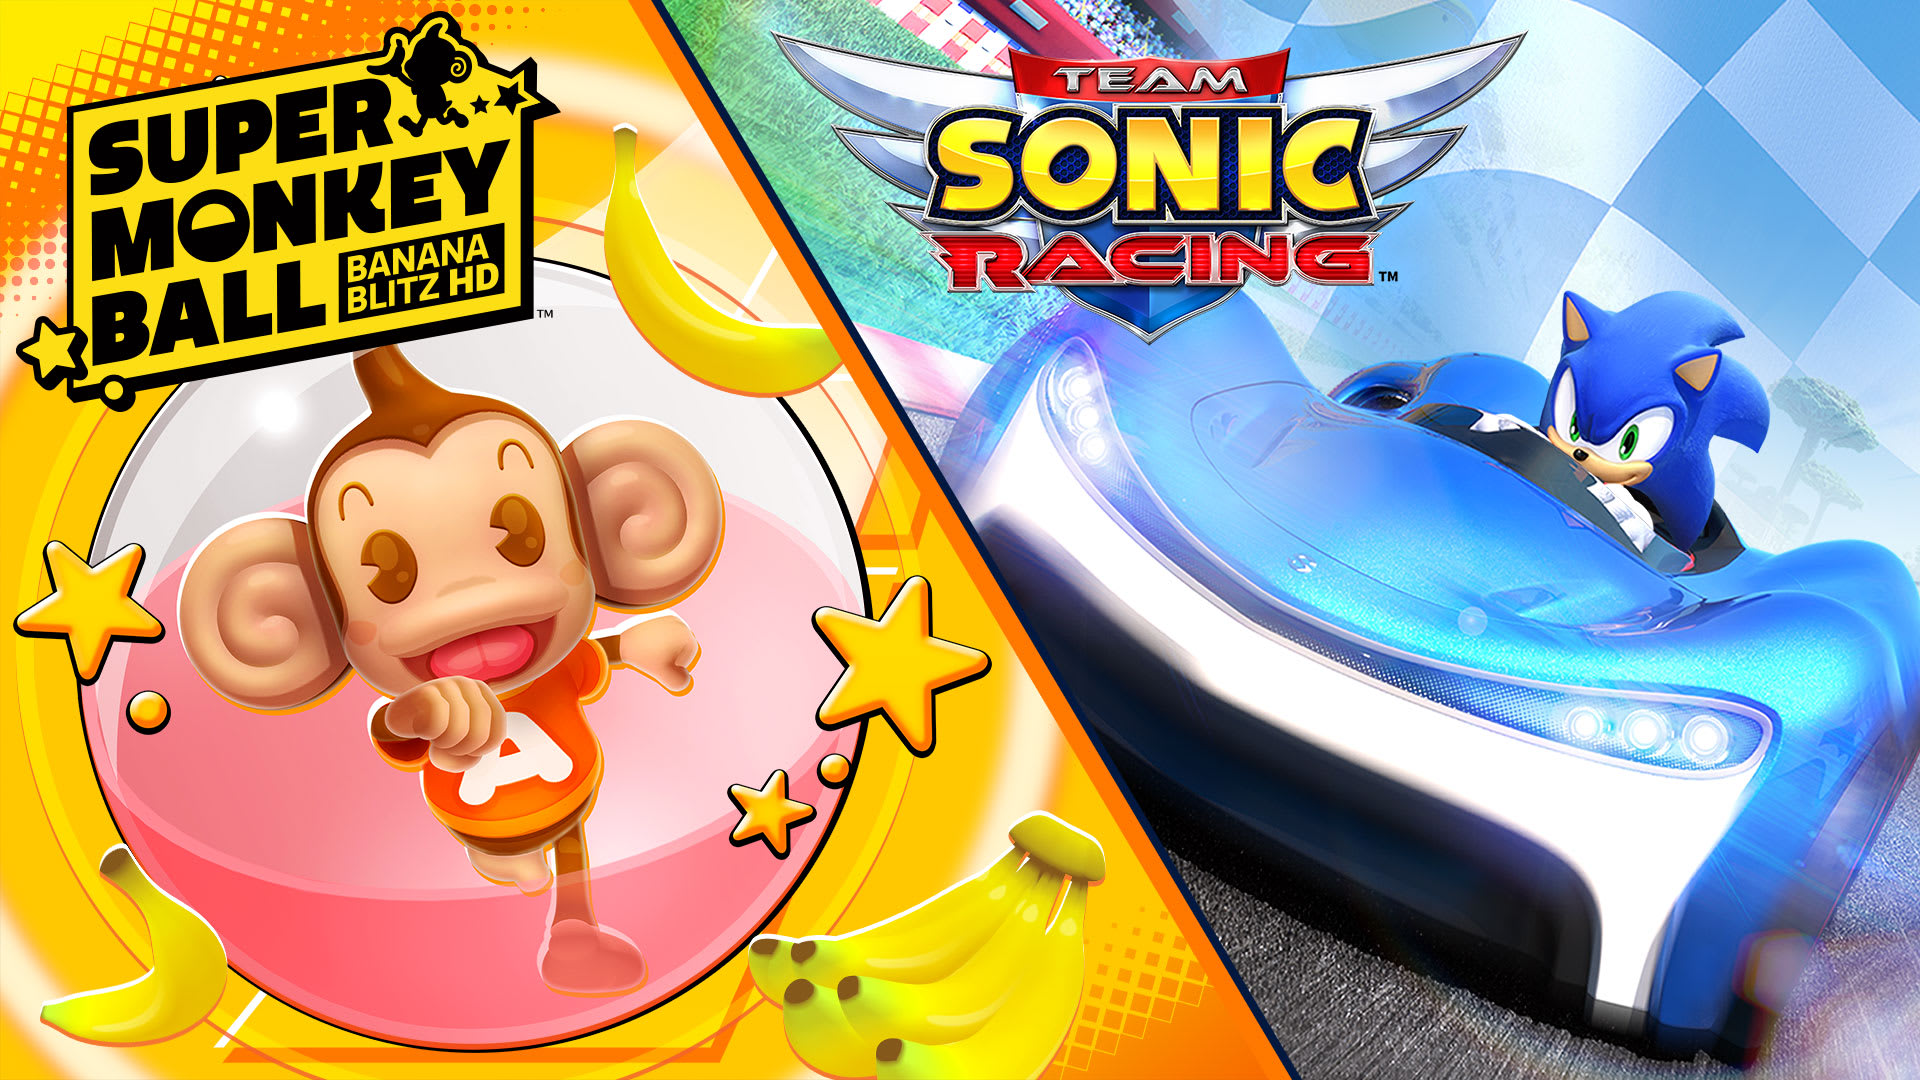 Team Sonic Racing + Super Monkey Ball: Banana Blitz HD Bundle 1